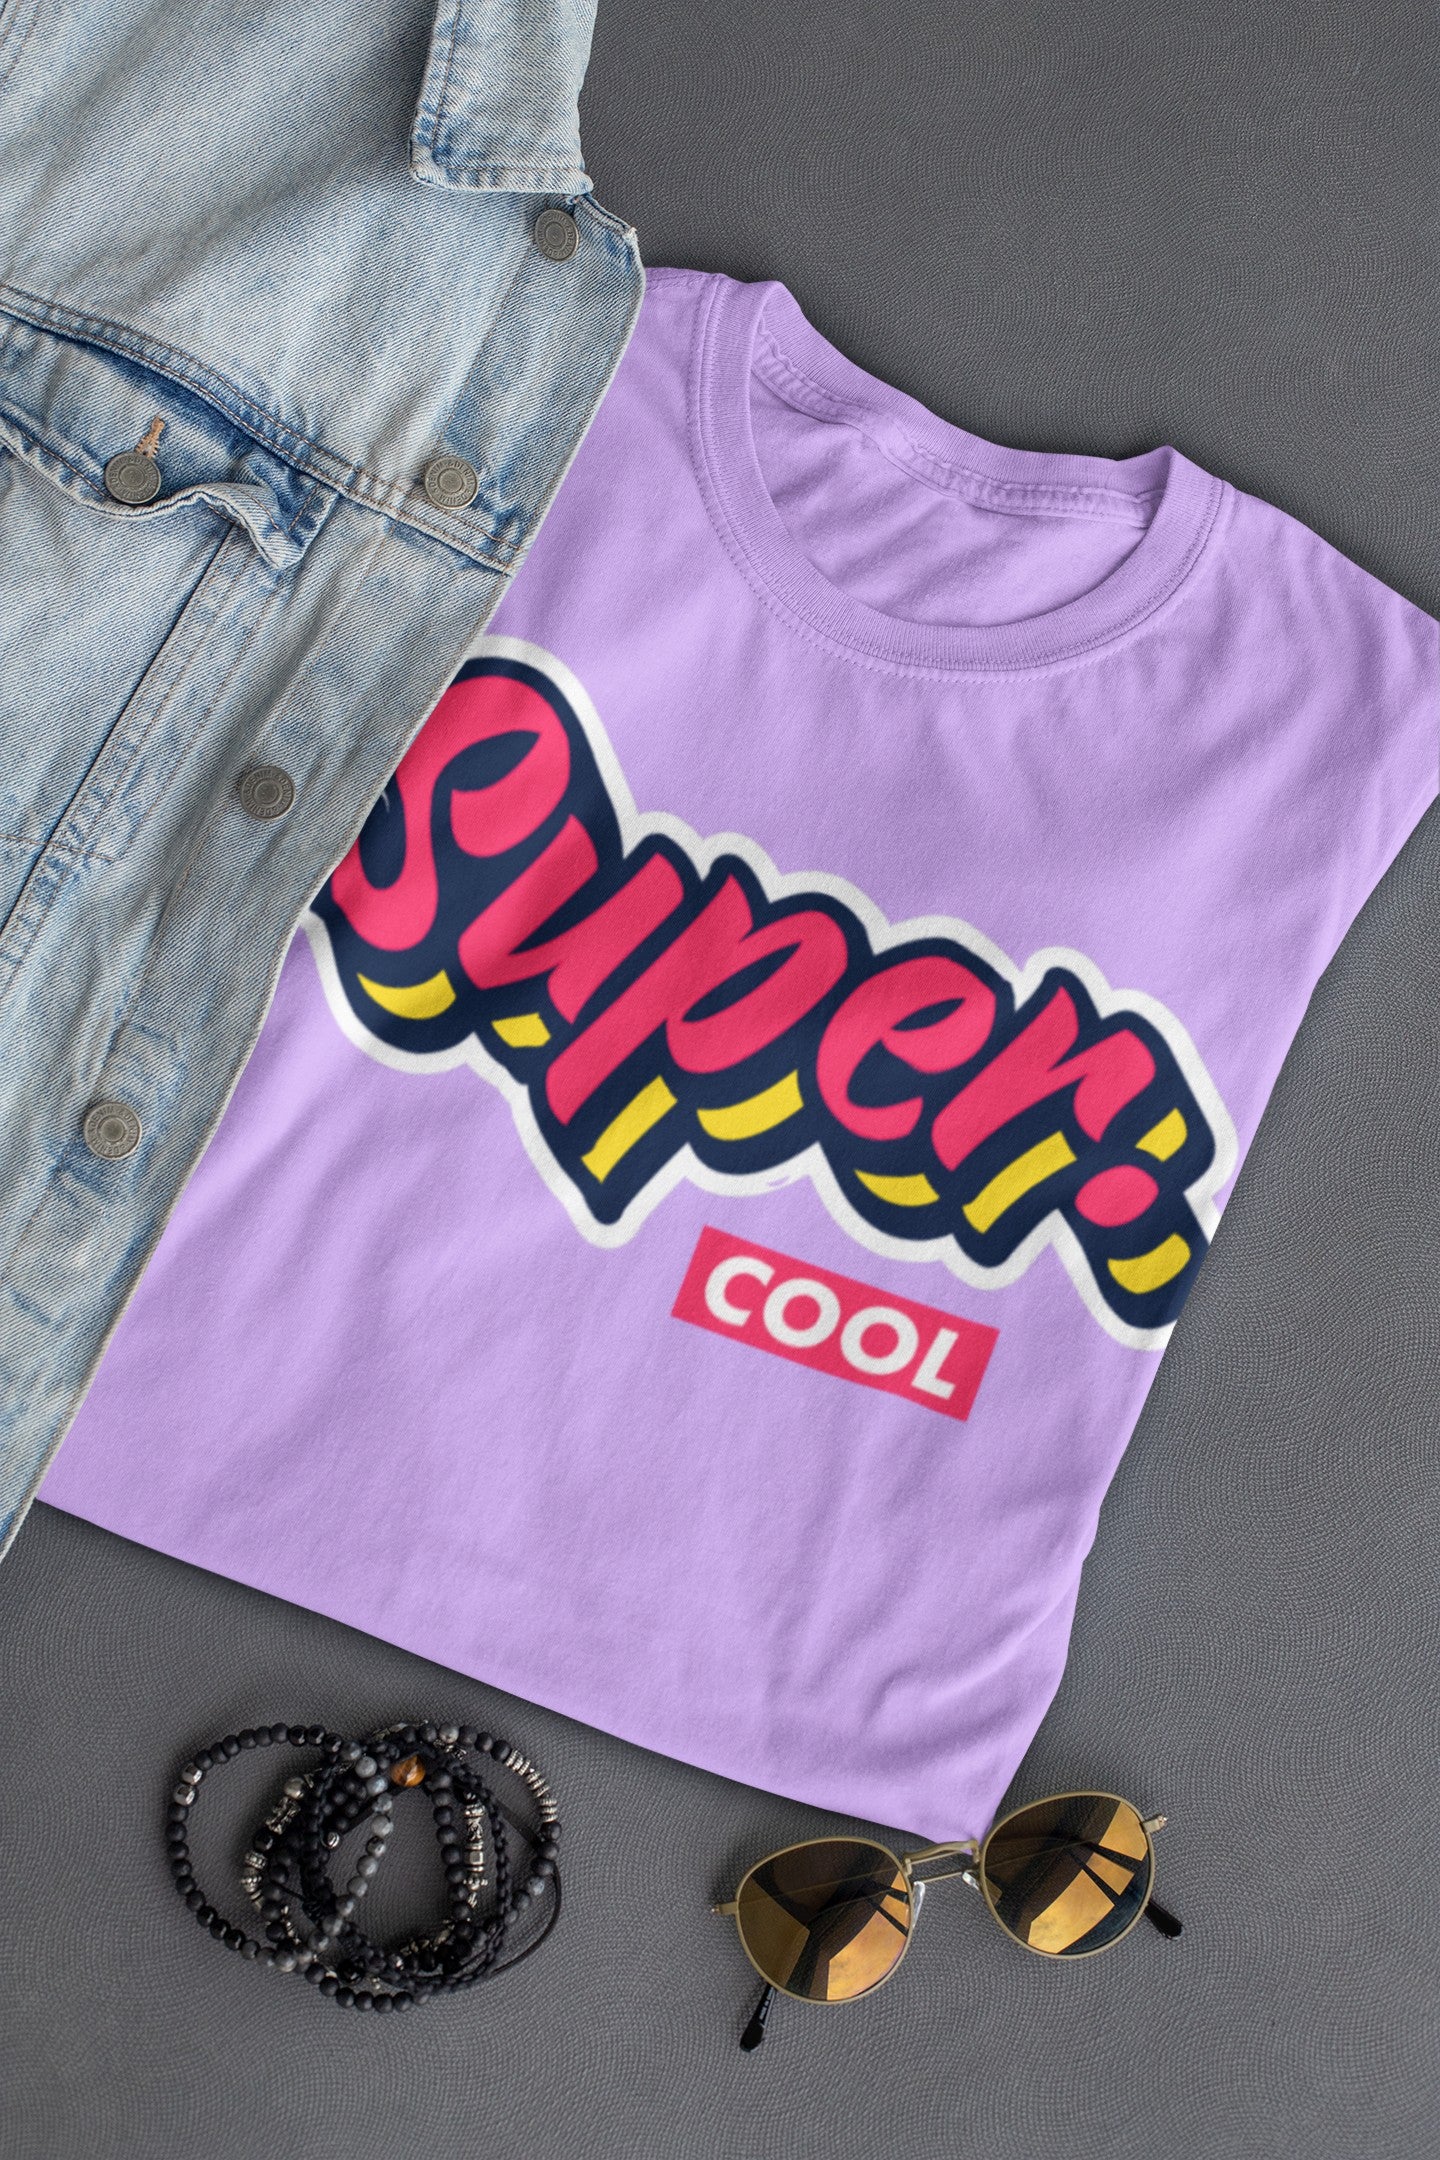 Gym T Shirt - Super Cool - Strong Soul - Sports T Shirt